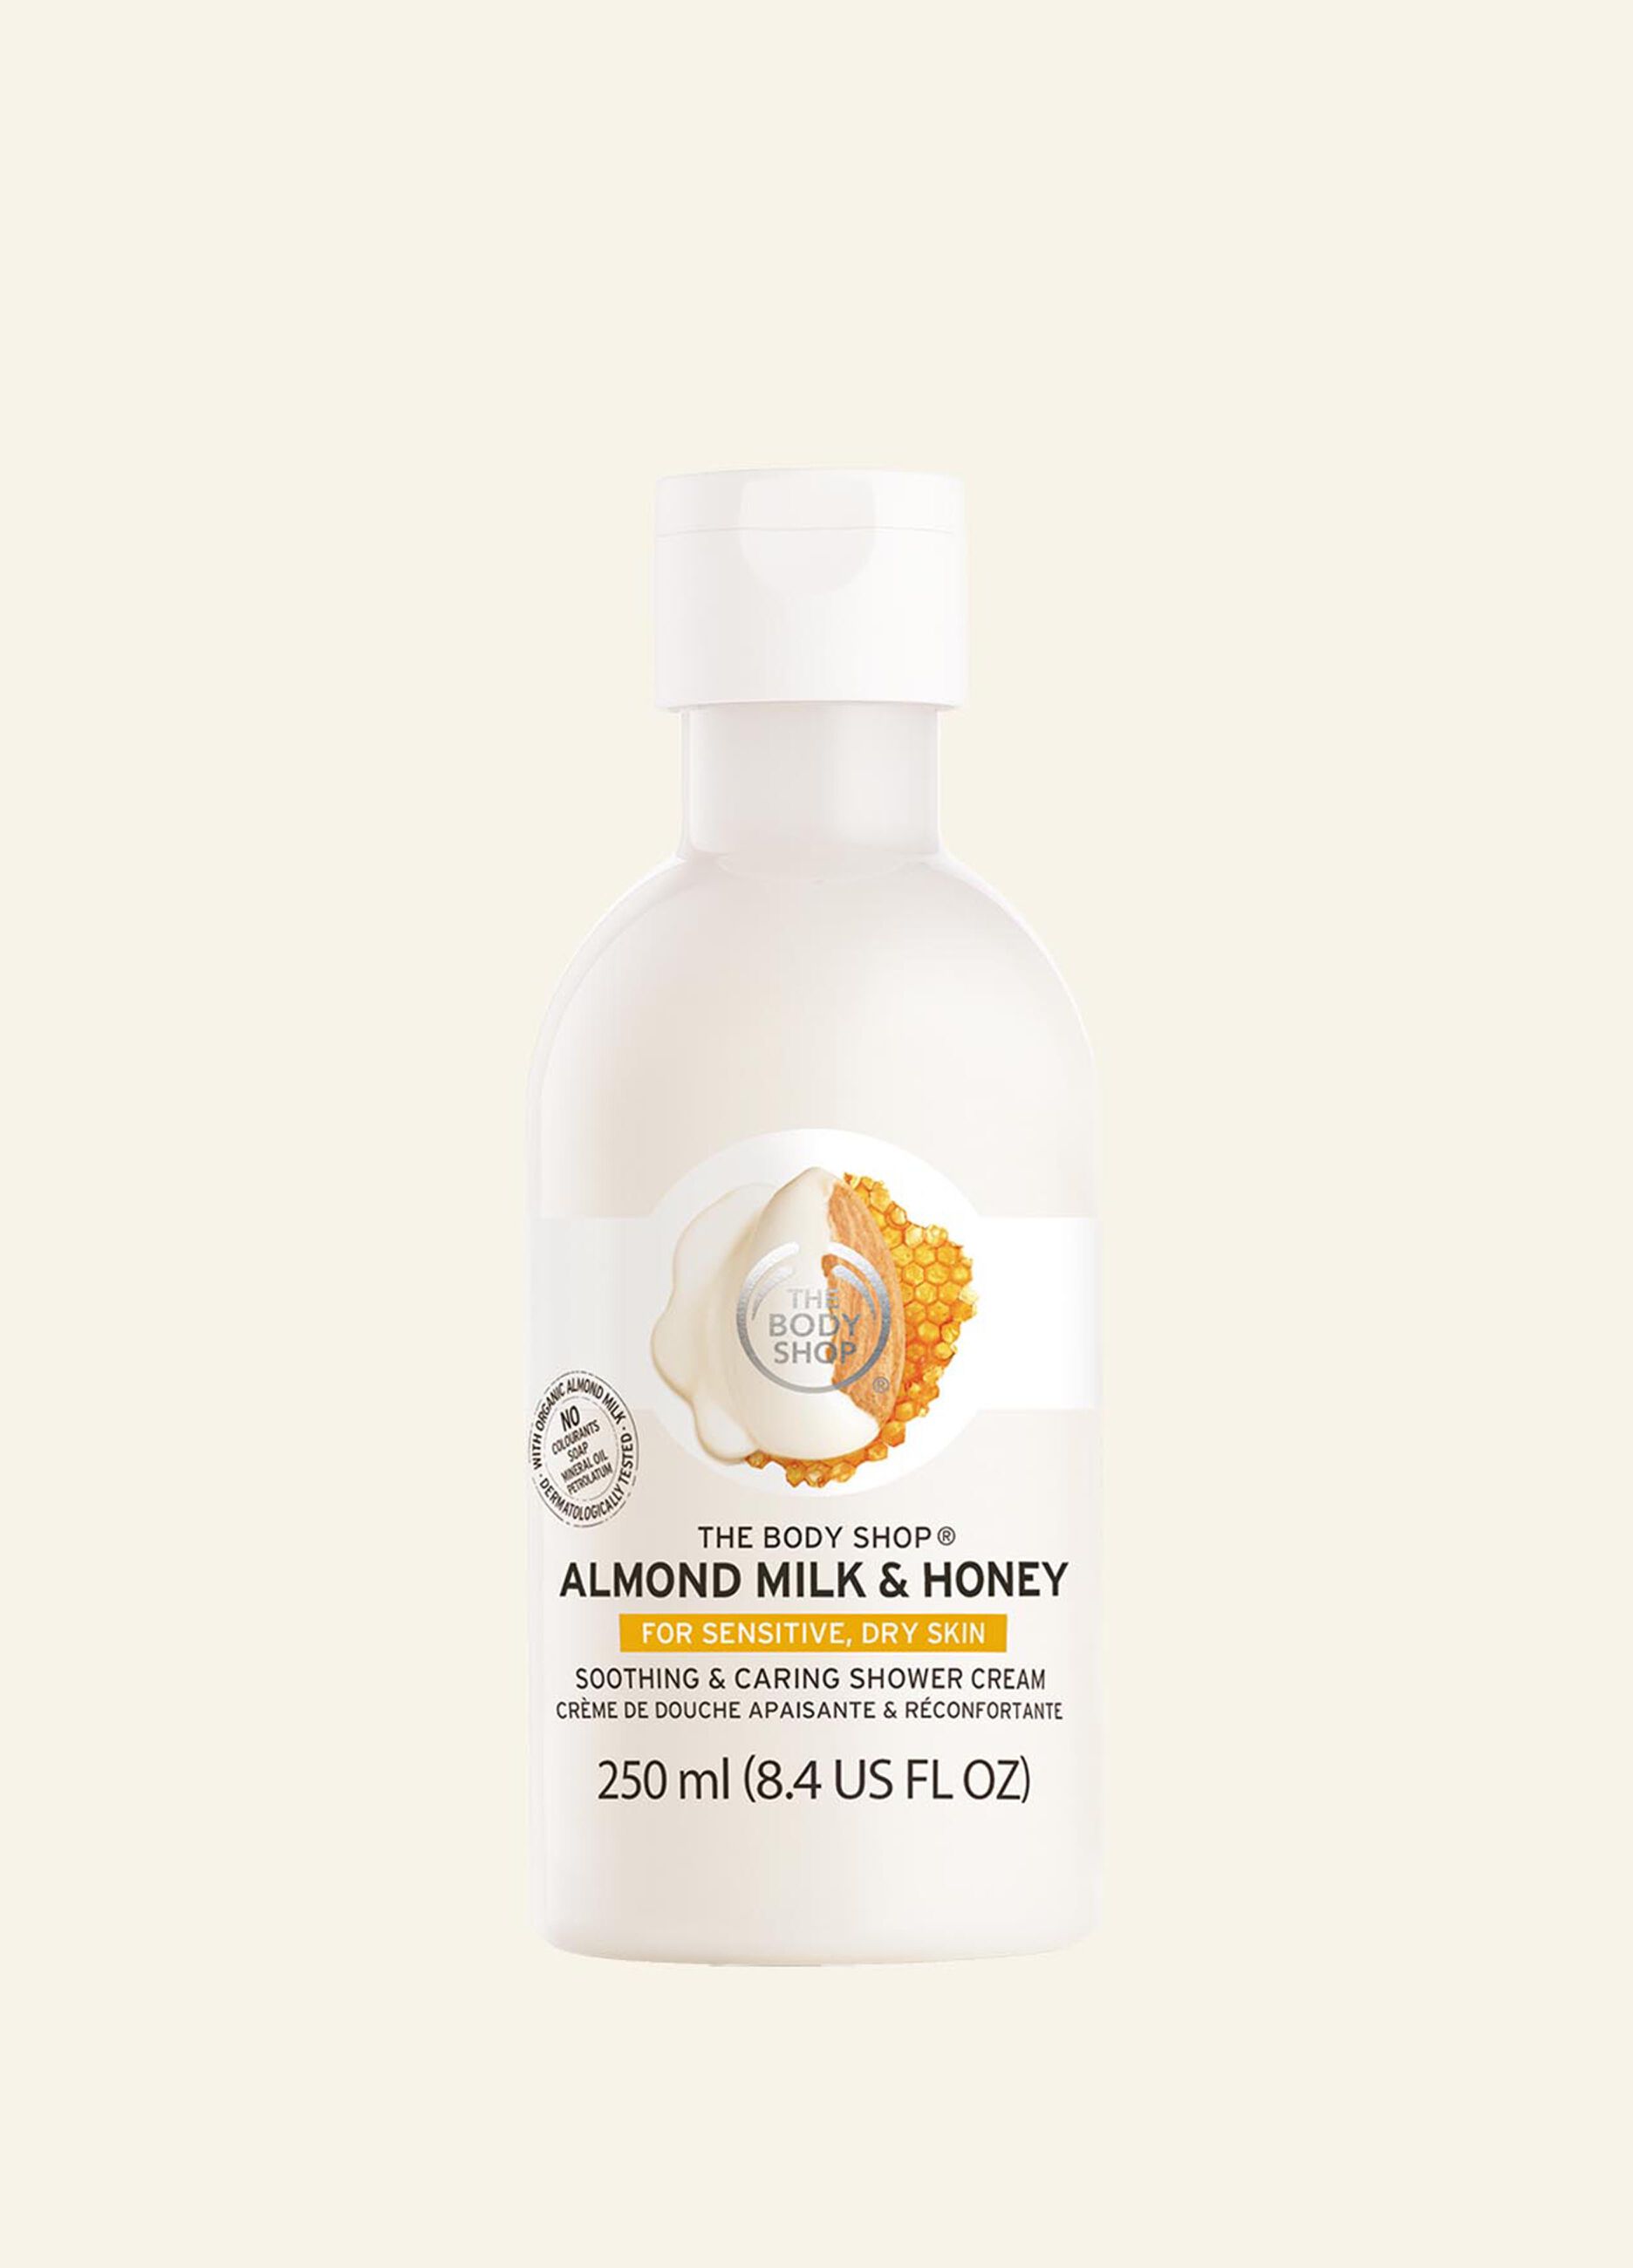 The Body Shop almond milk and honey shower cream 250ml